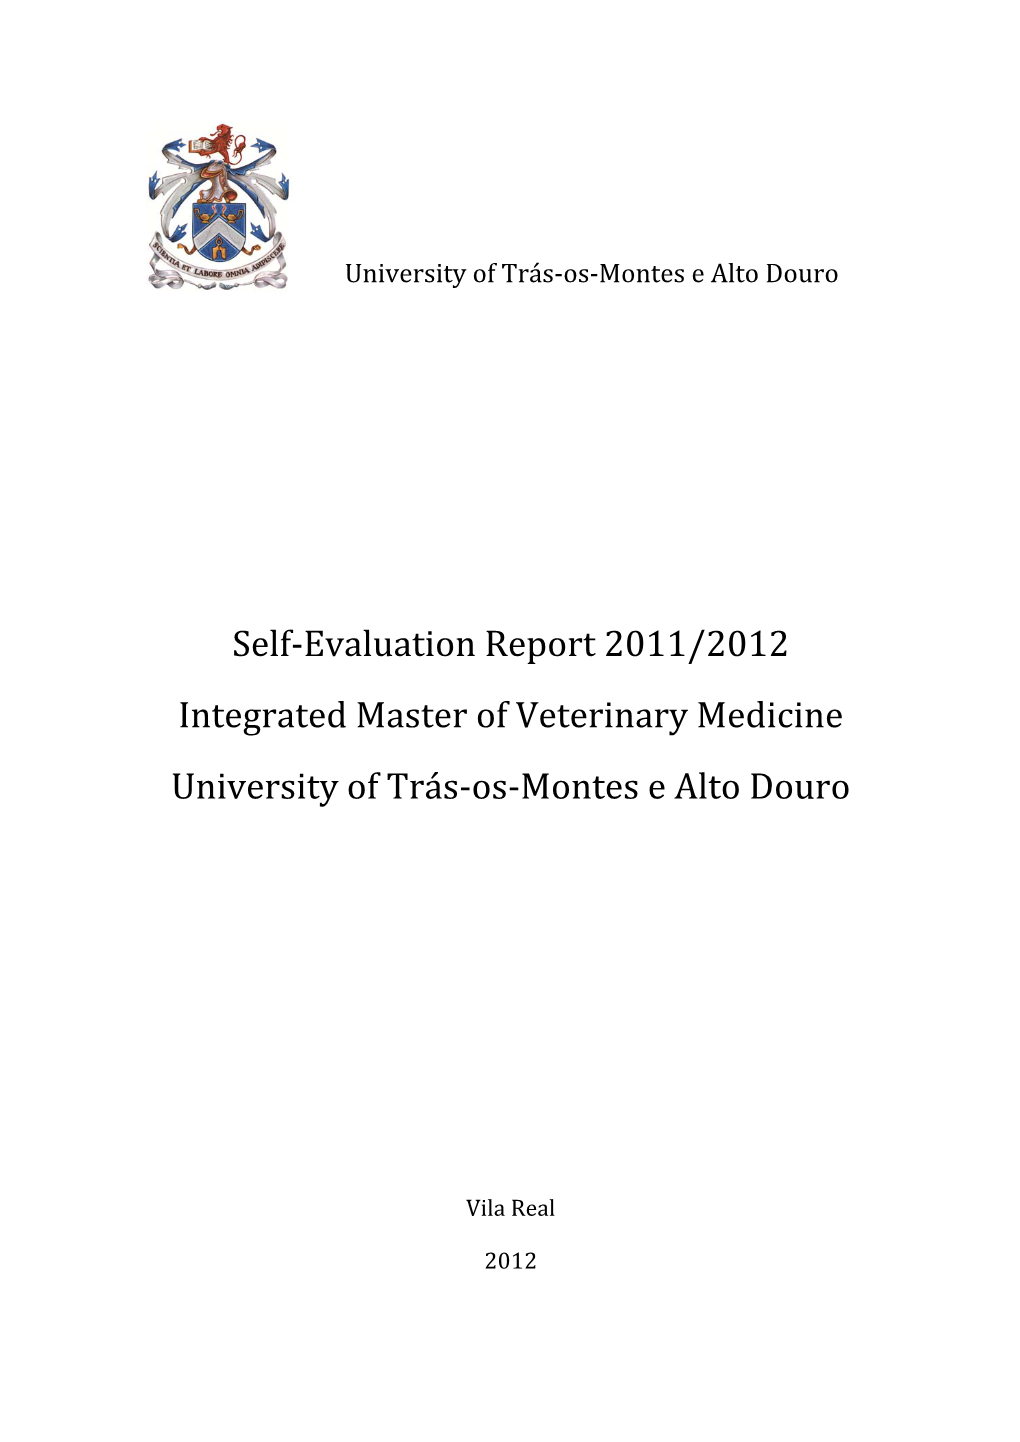 Self‐Evaluation Report 2011/2012 Integrated Master of Veterinary Medicine University of Trás‐Os‐Montes E Alto Douro